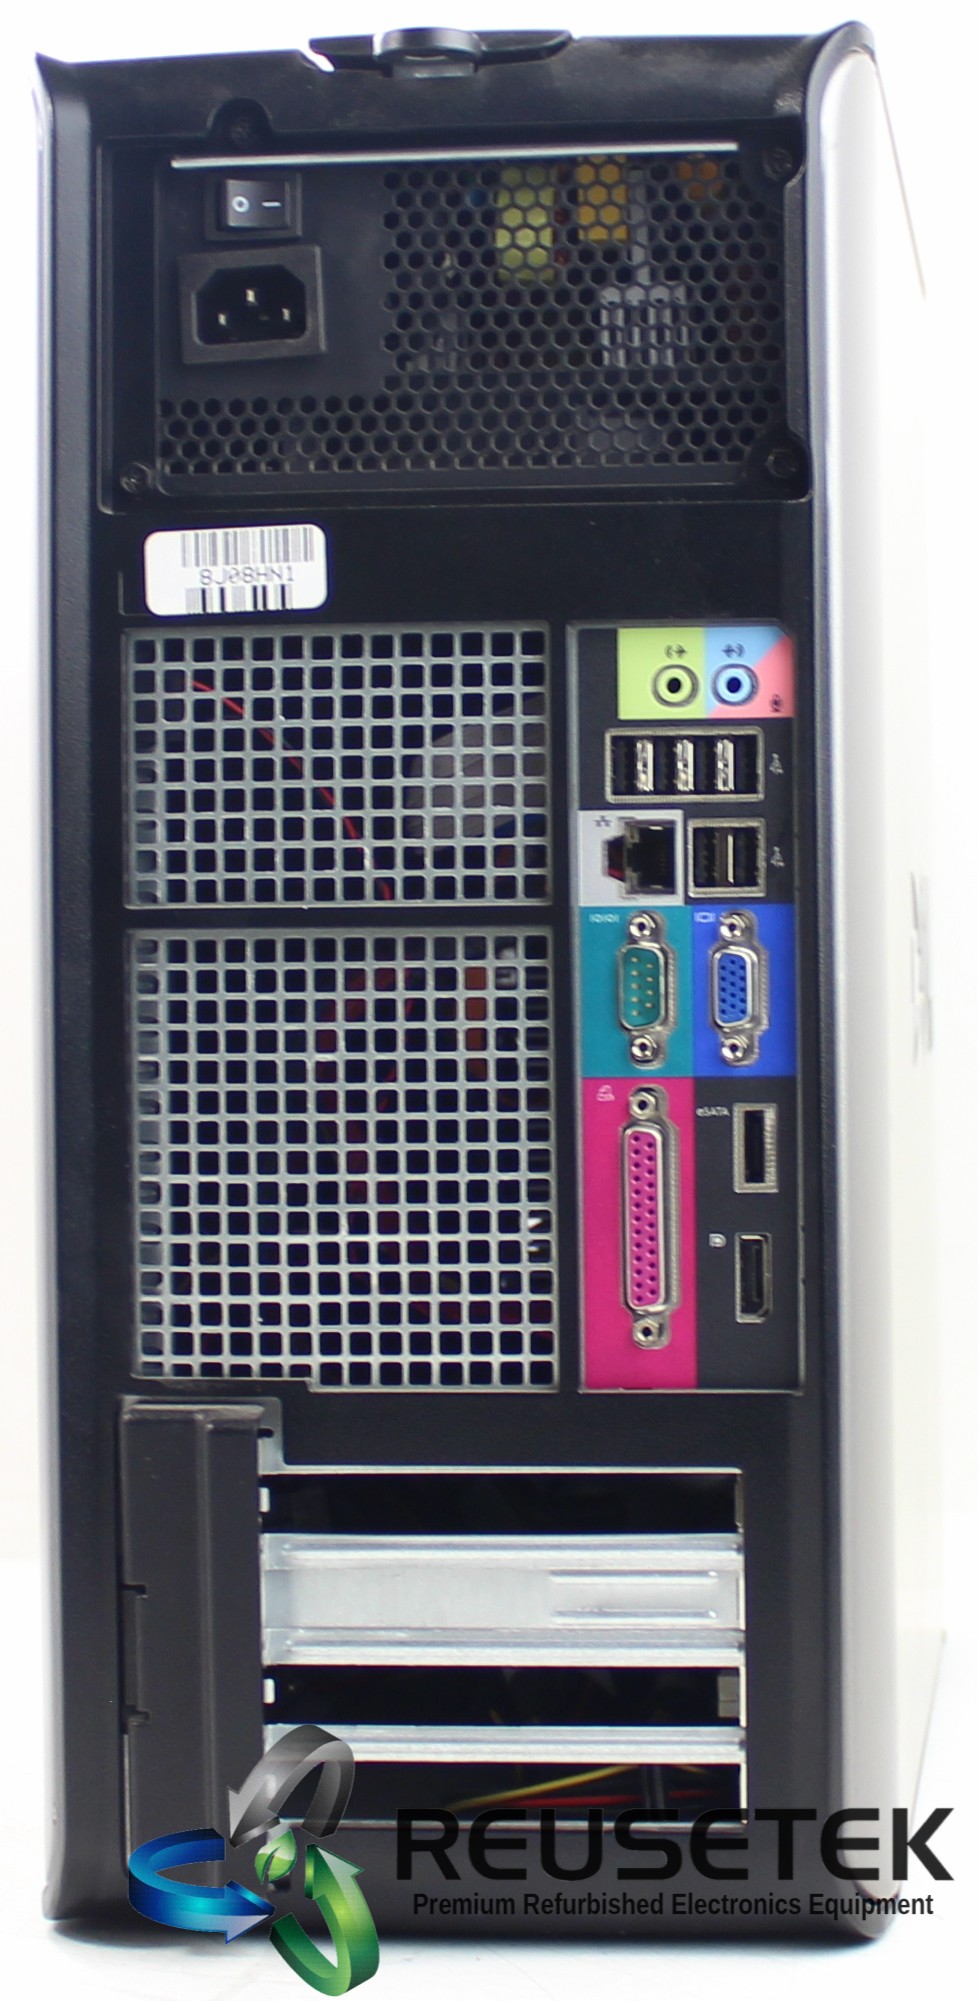 10000492-Dell Optiplex 780 Desktop PC-image